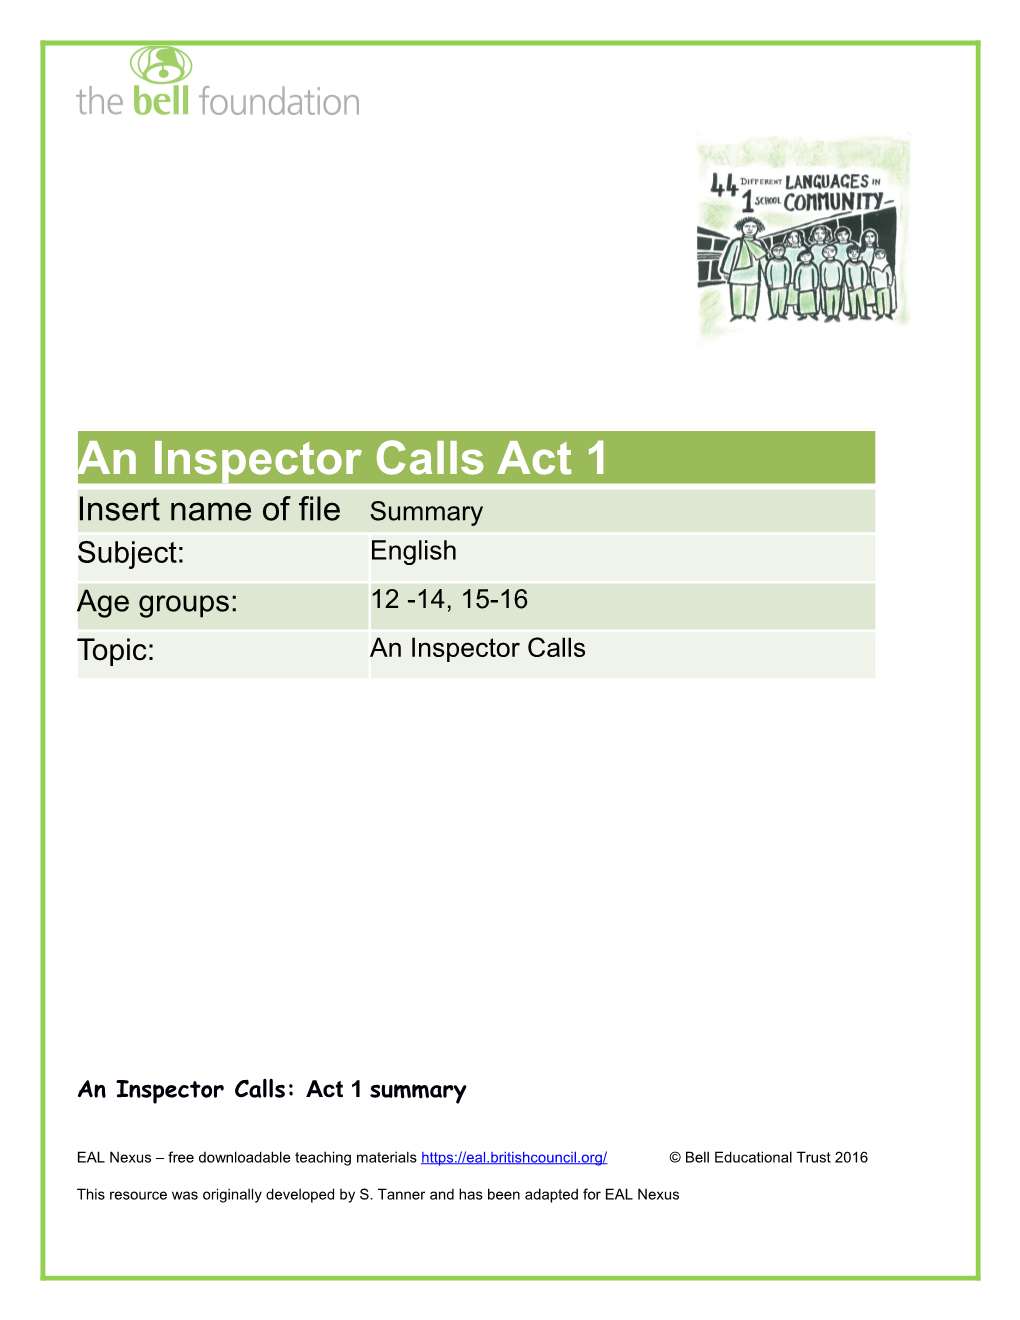 An Inspector Calls: Act 1 Summary